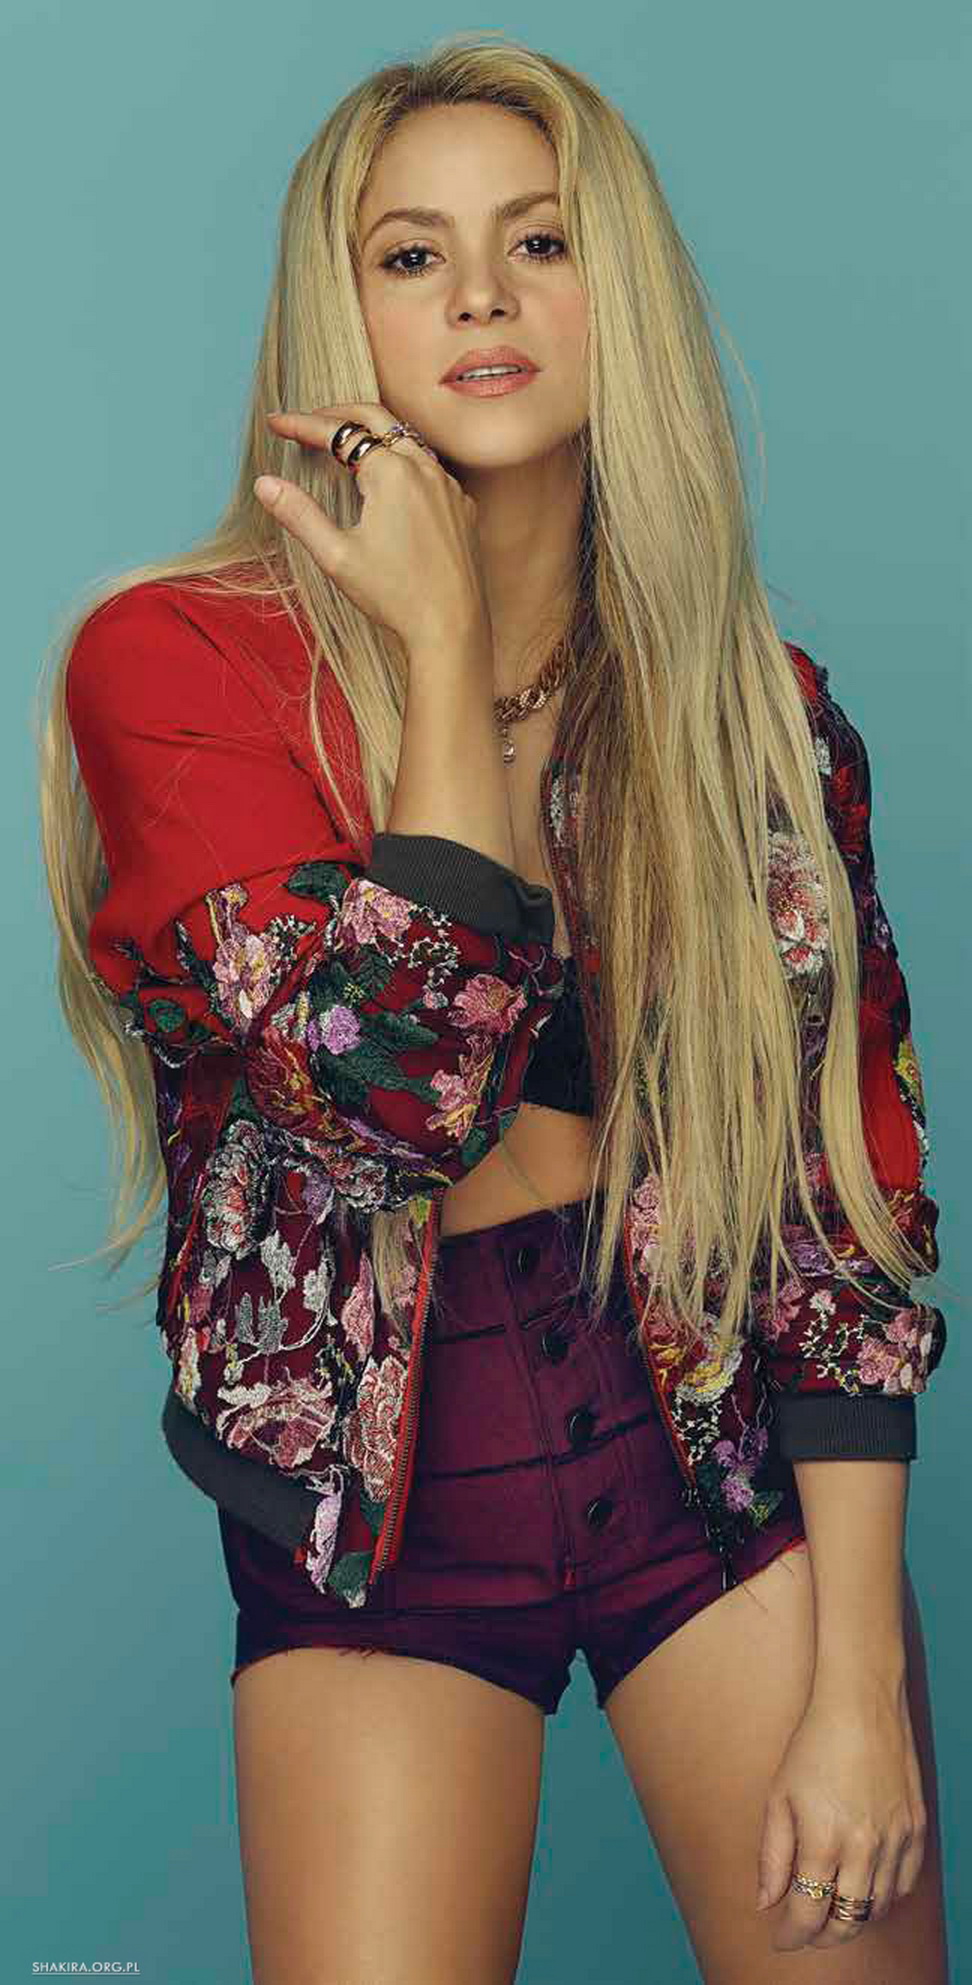 Shakira sexy for Cosmopolitan magazine July 2017 13x HQ photos 16.jpg